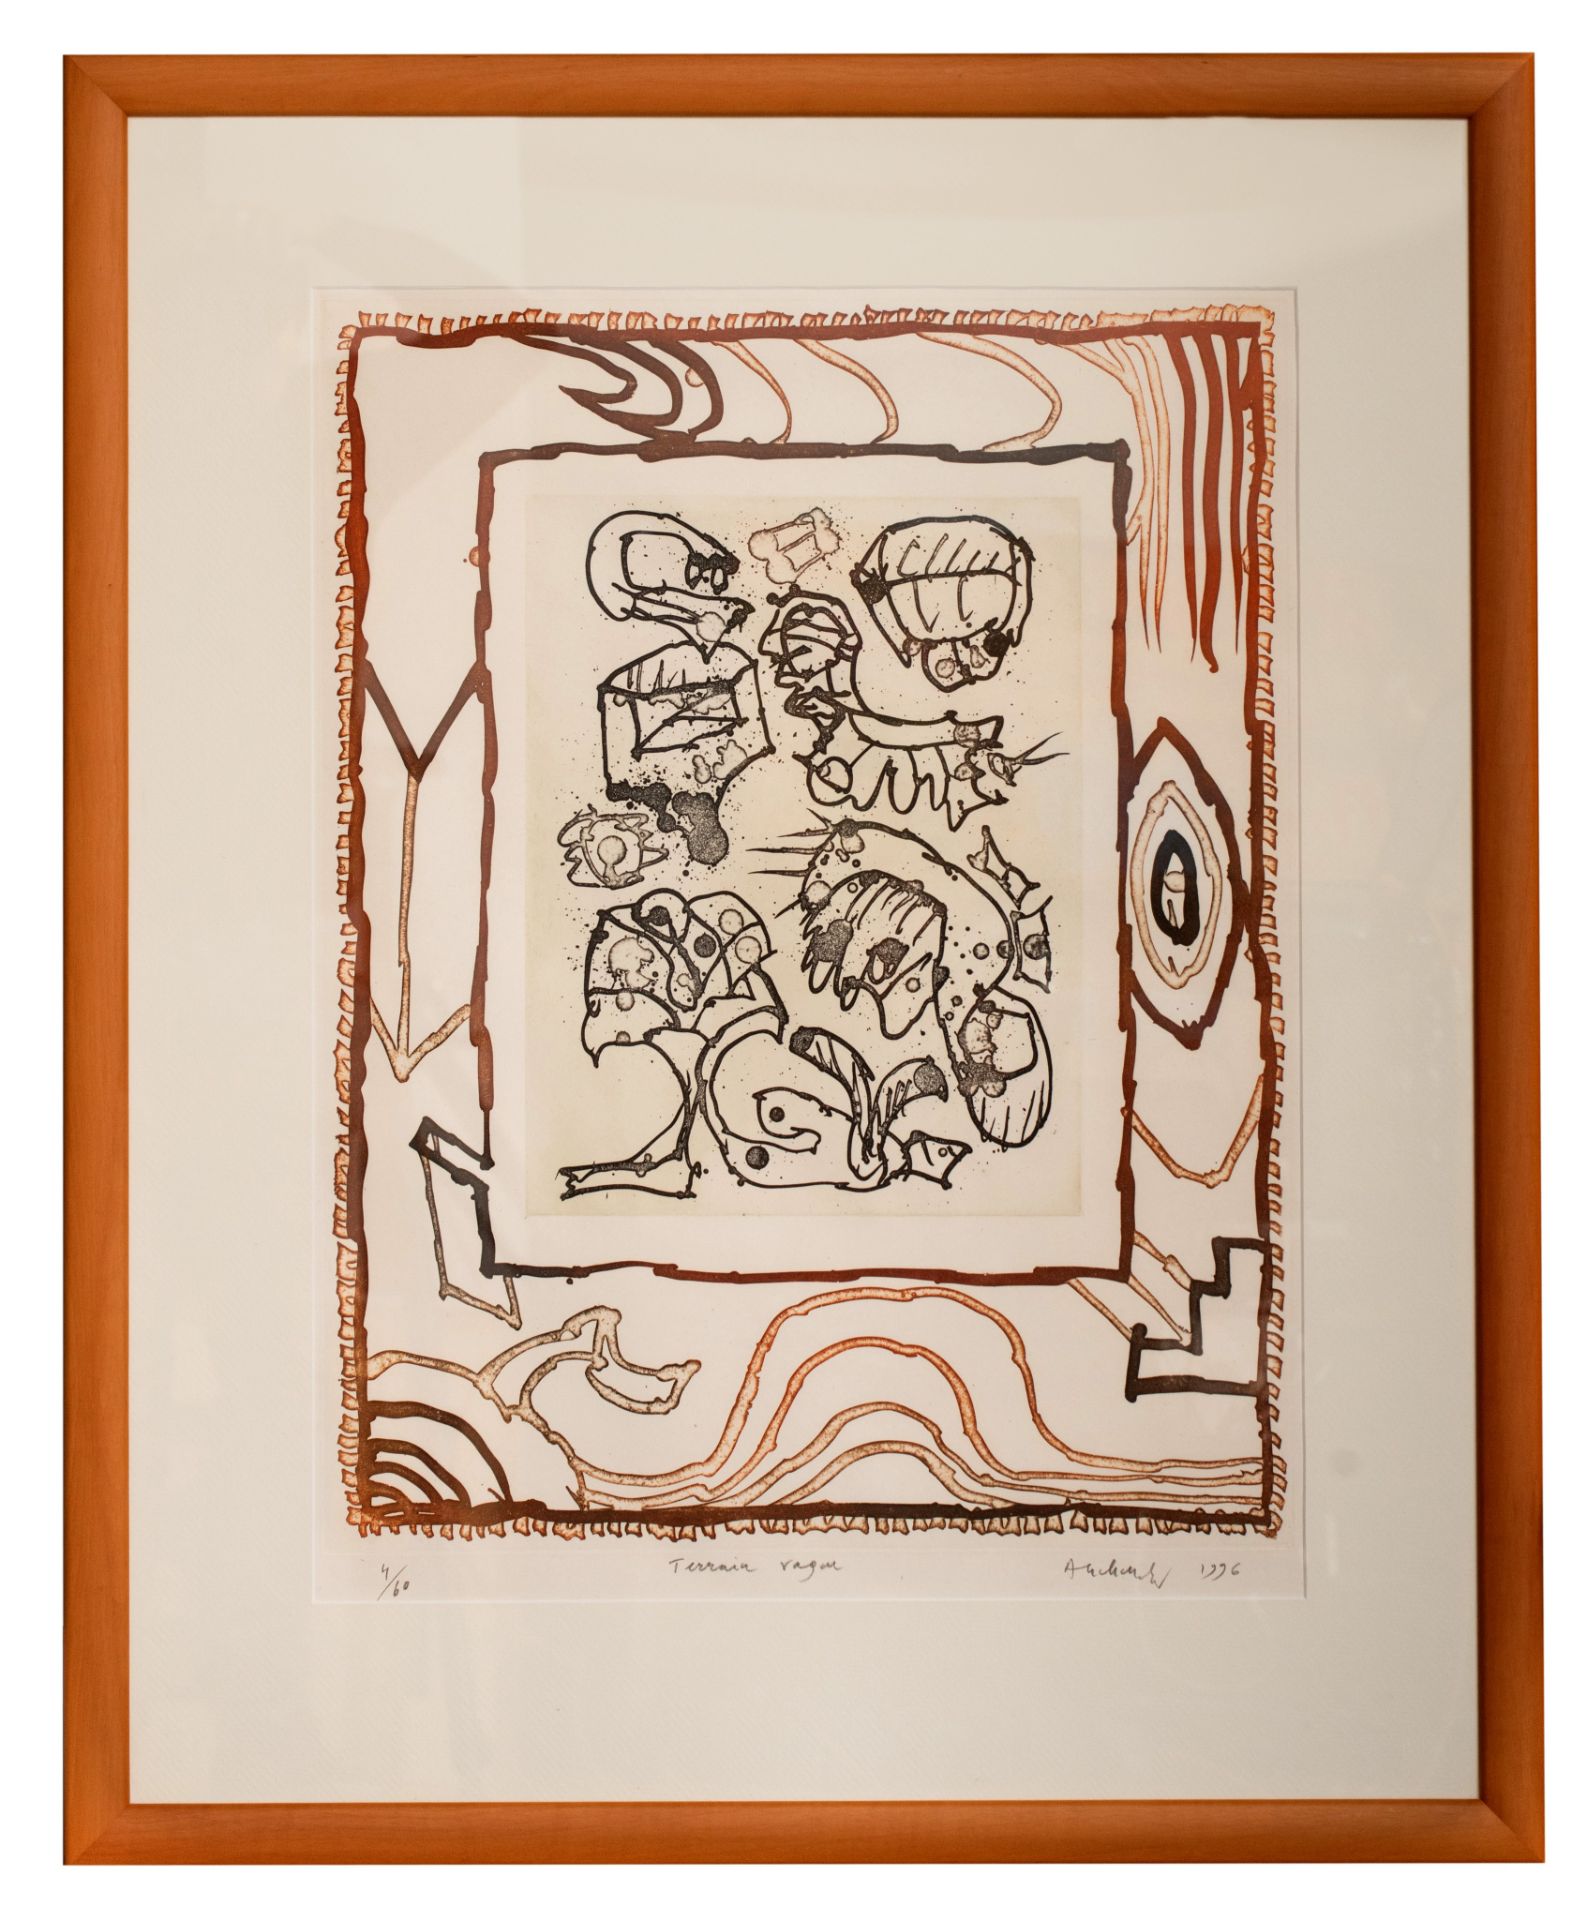 Pierre Alechinsky (1927), 'Terrain Vague', 1996, aquatint, N° 4/60, 53 x 68 cm - Image 2 of 5